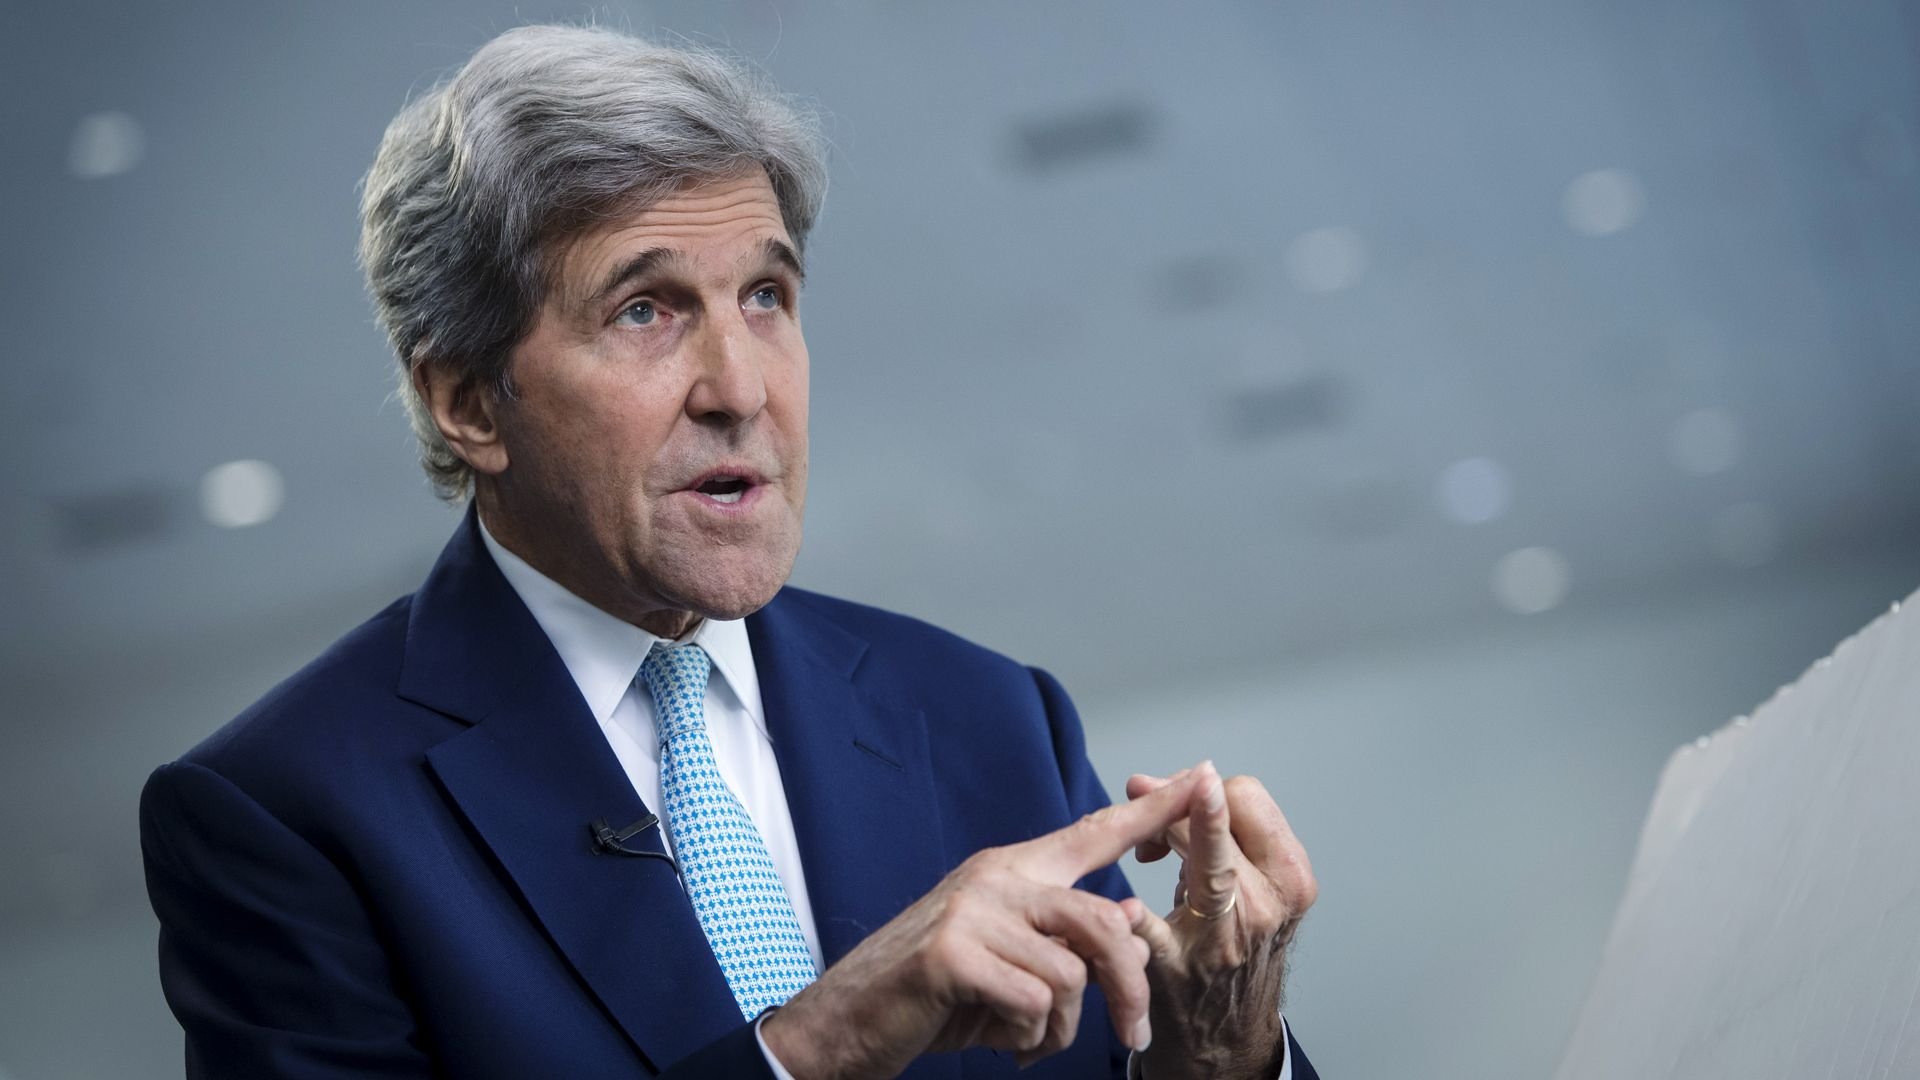 John Kerry plays down COP26, knocks Congress over climate legislation